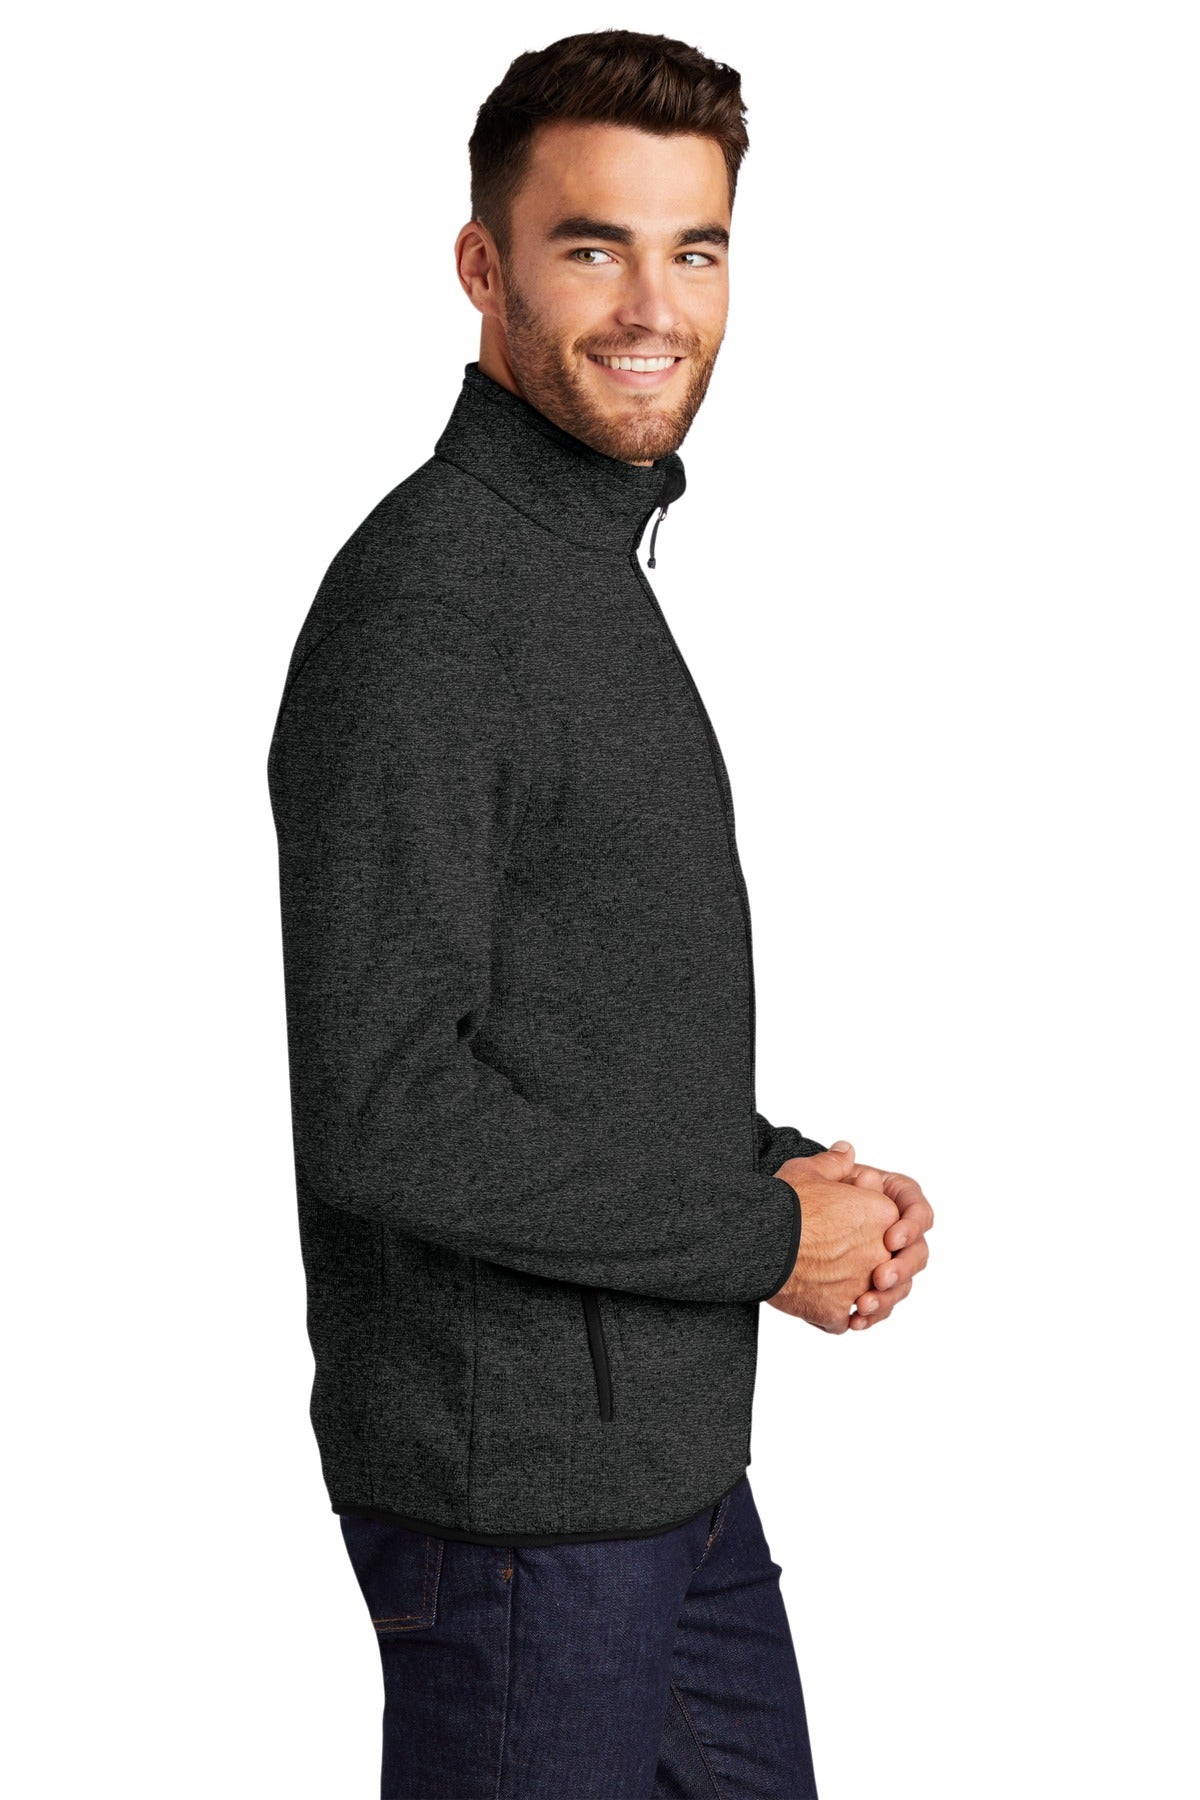 Port Authority® Sweater Fleece Jacket. F232 - DFW Impression